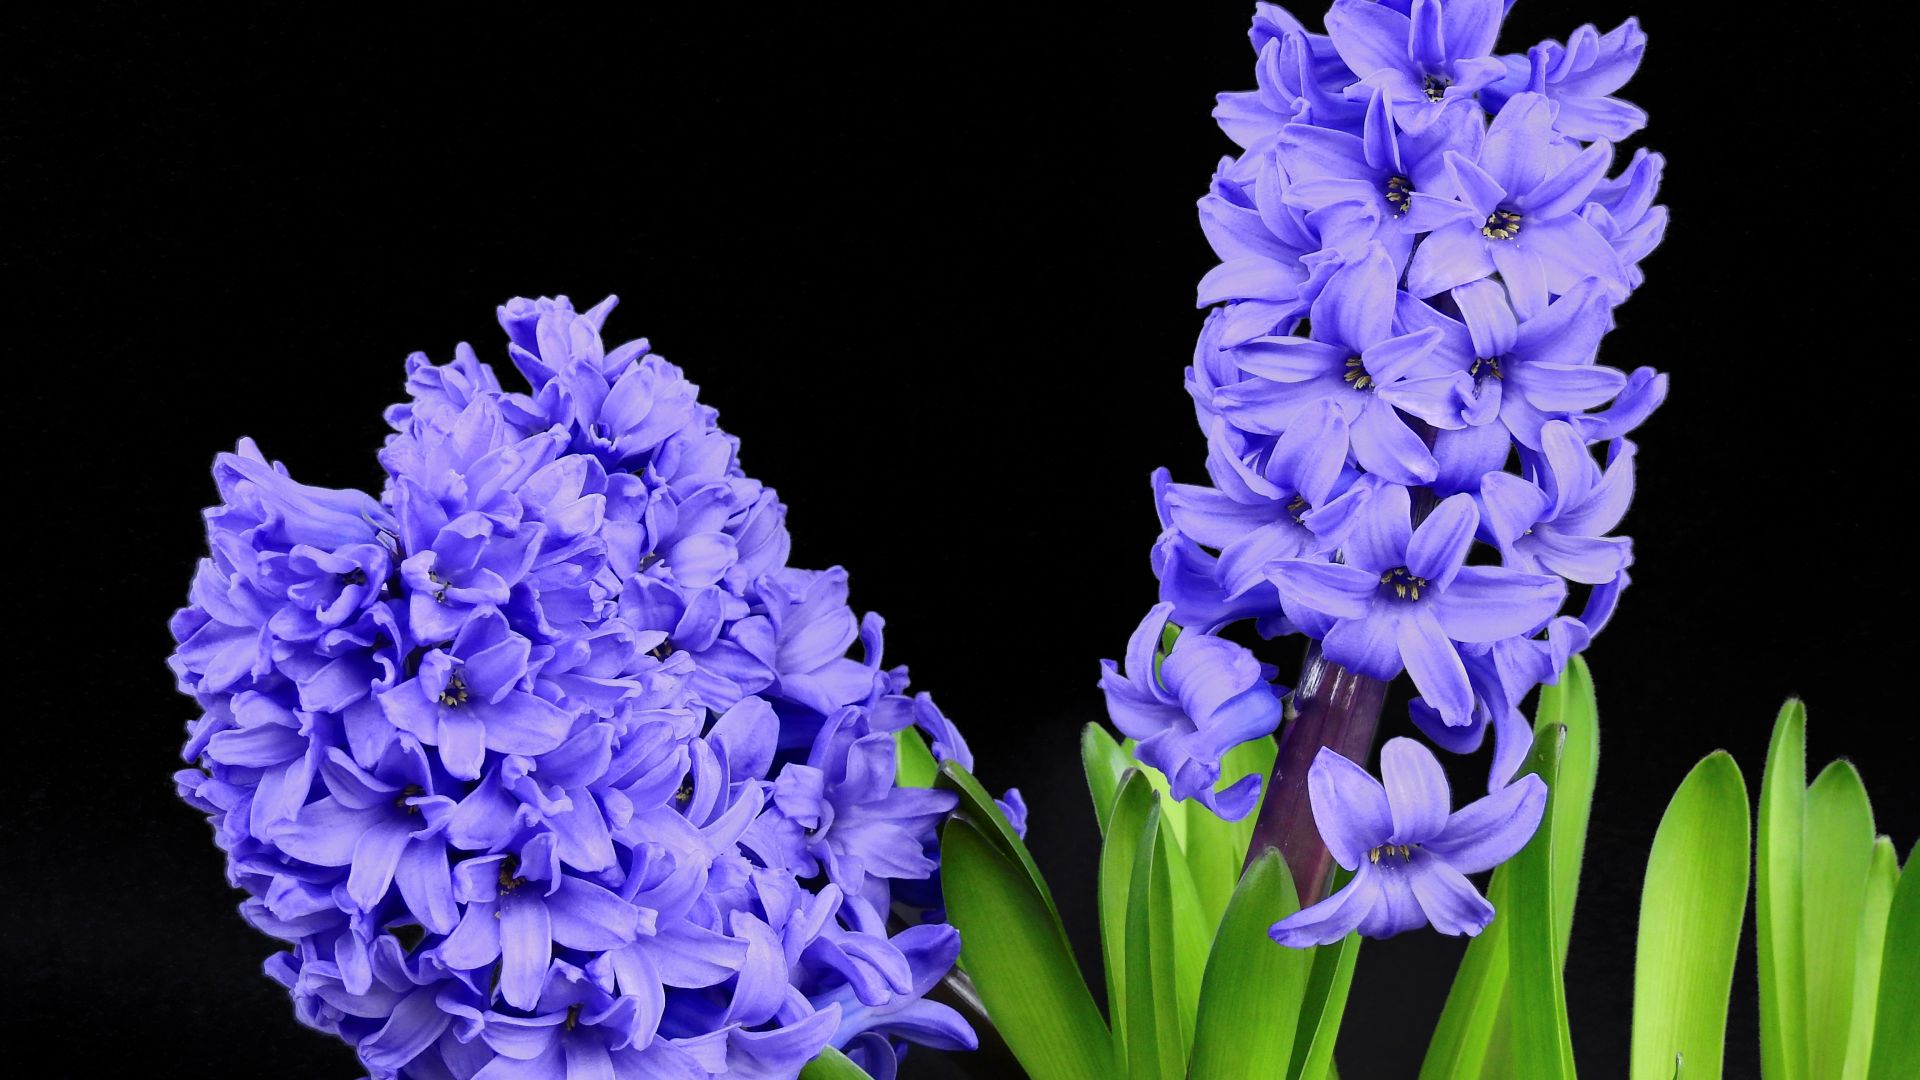 Wallpaper Hyacinth flowers, purple